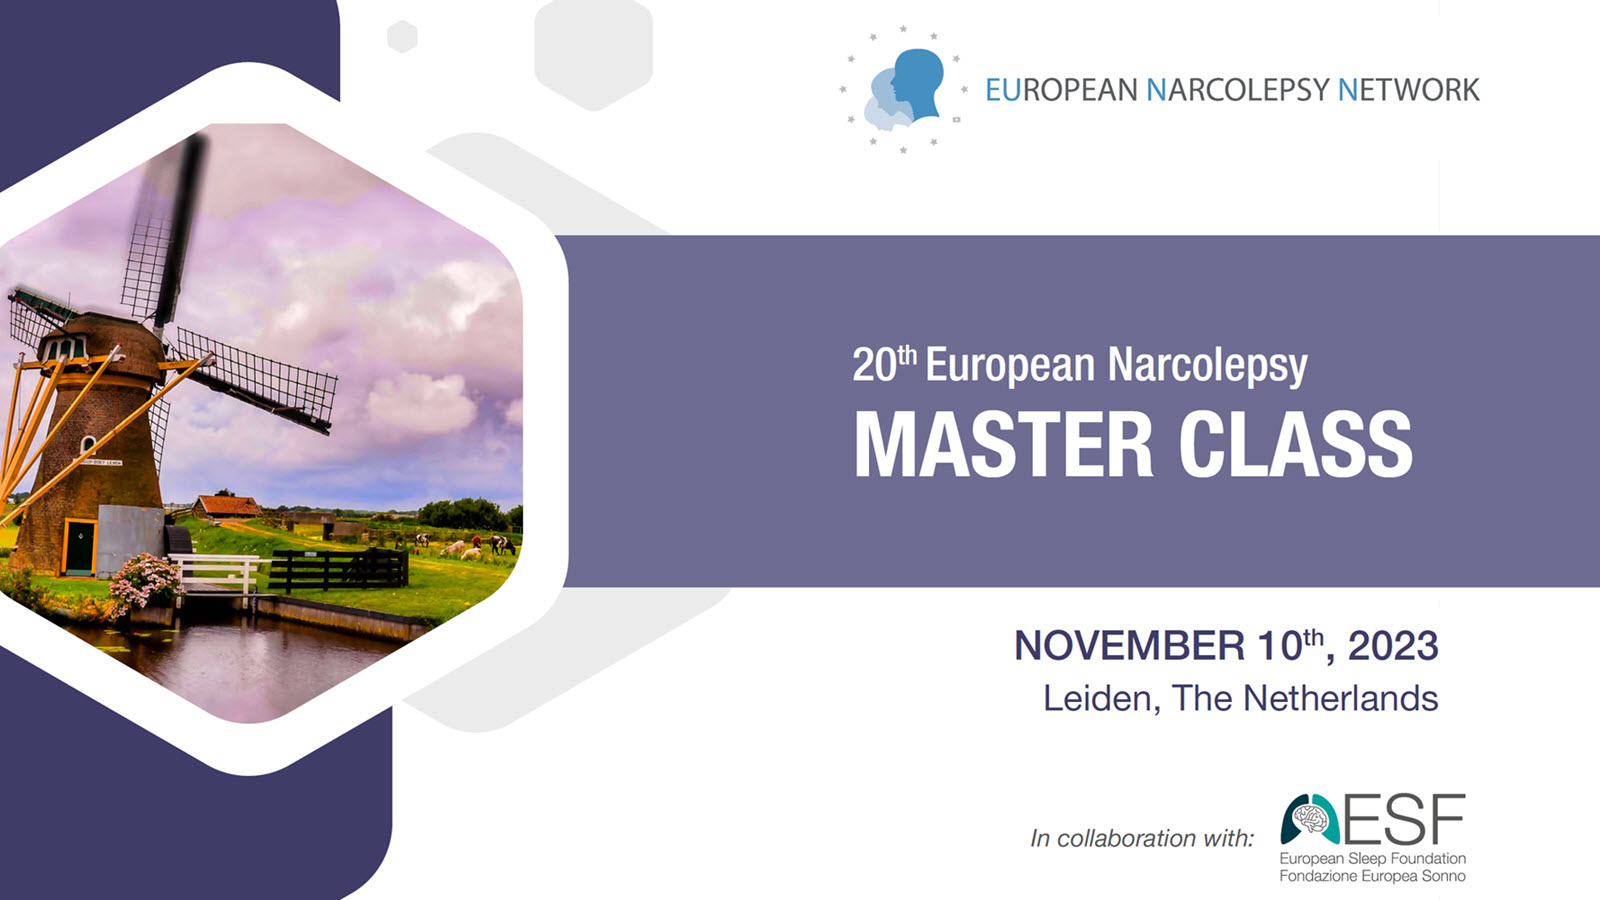 20th European Narcolepsy Master Class European Narcolepsy network